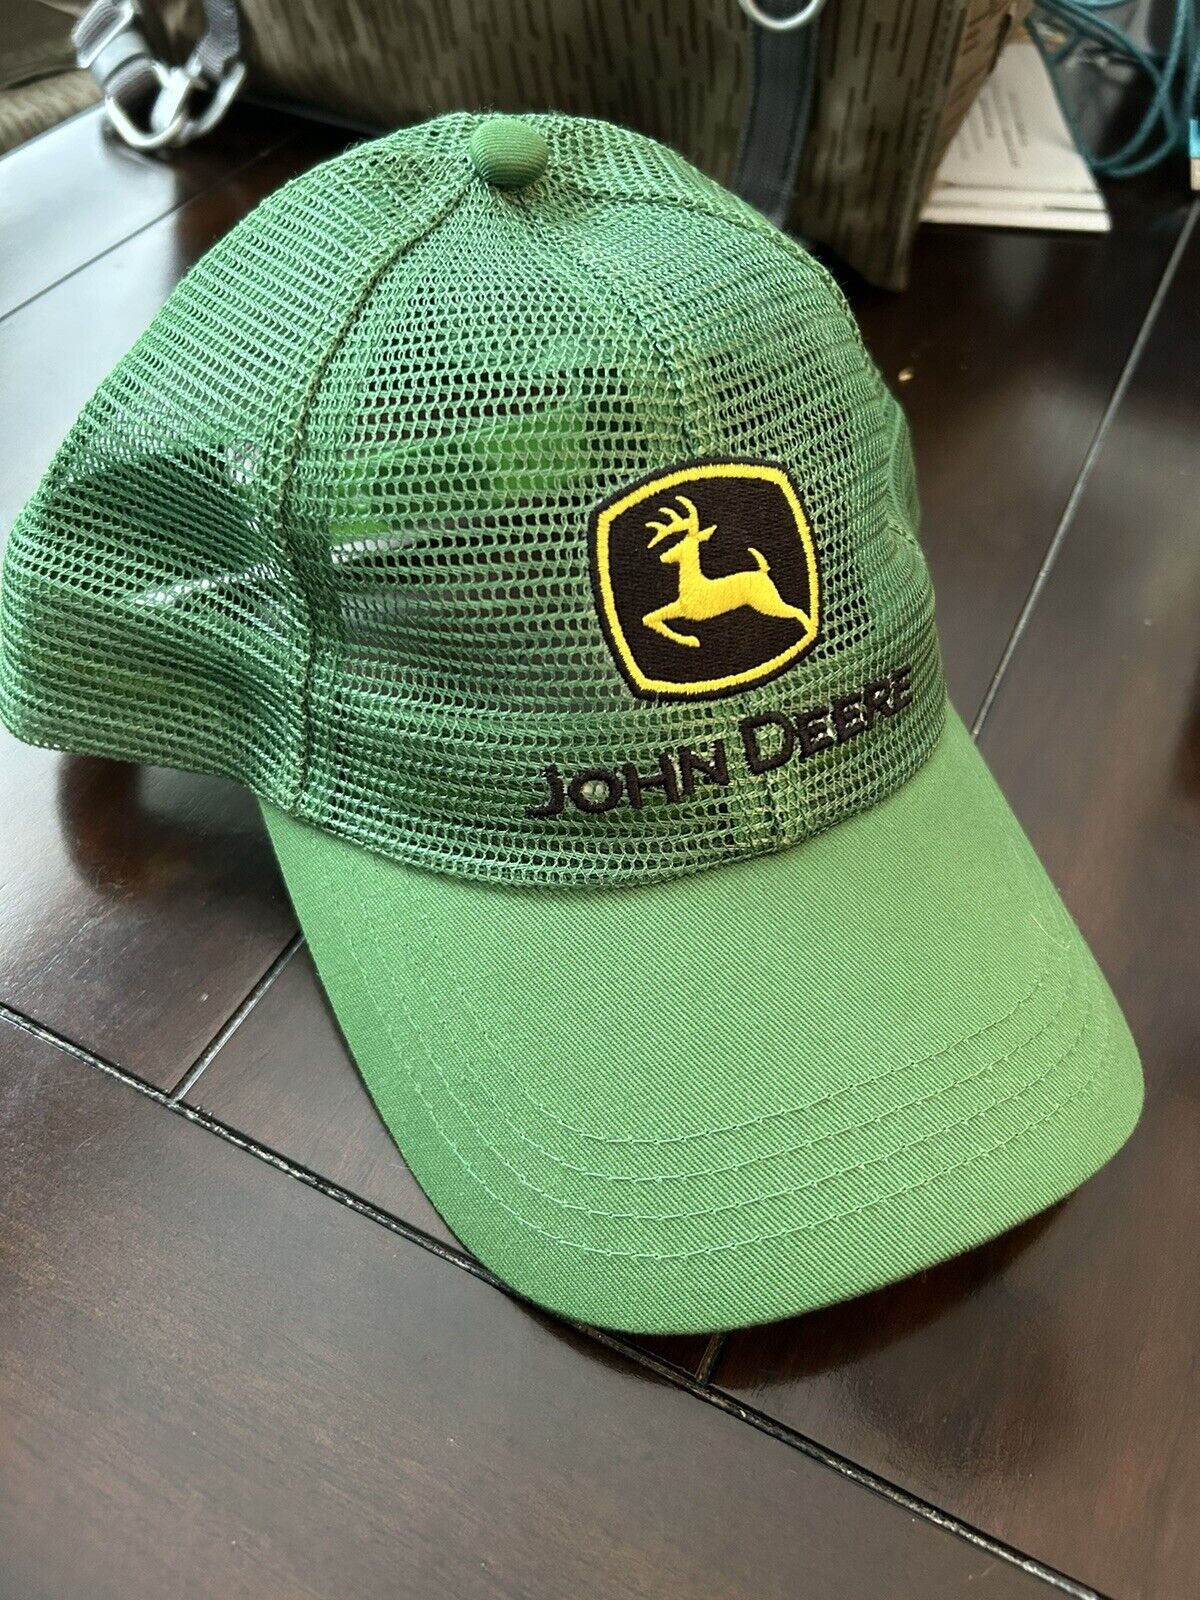 Vintage John Deere Mesh Green Embroidered Trucker Hat Adjustable Patch Cap VGC